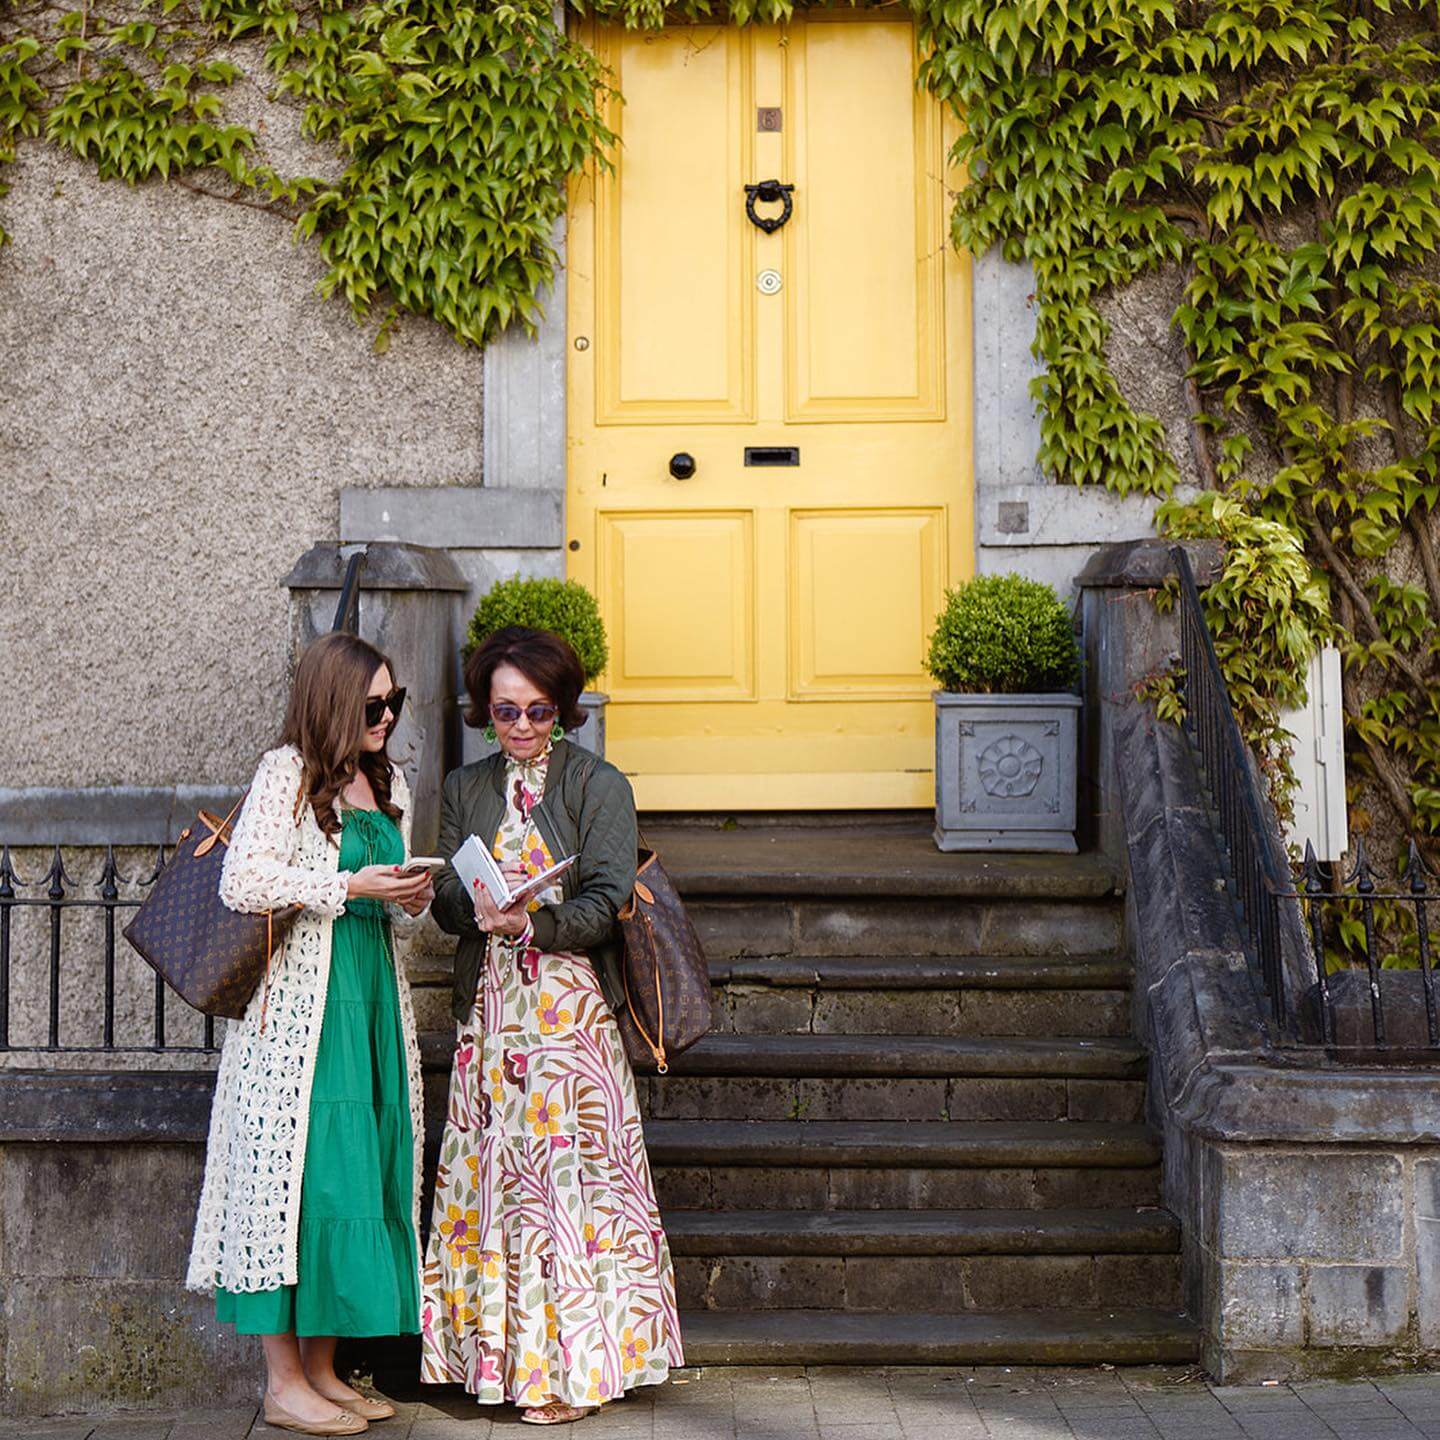 Katie Beth Bowman and Kim Bowman in Kilkenny, Ireland